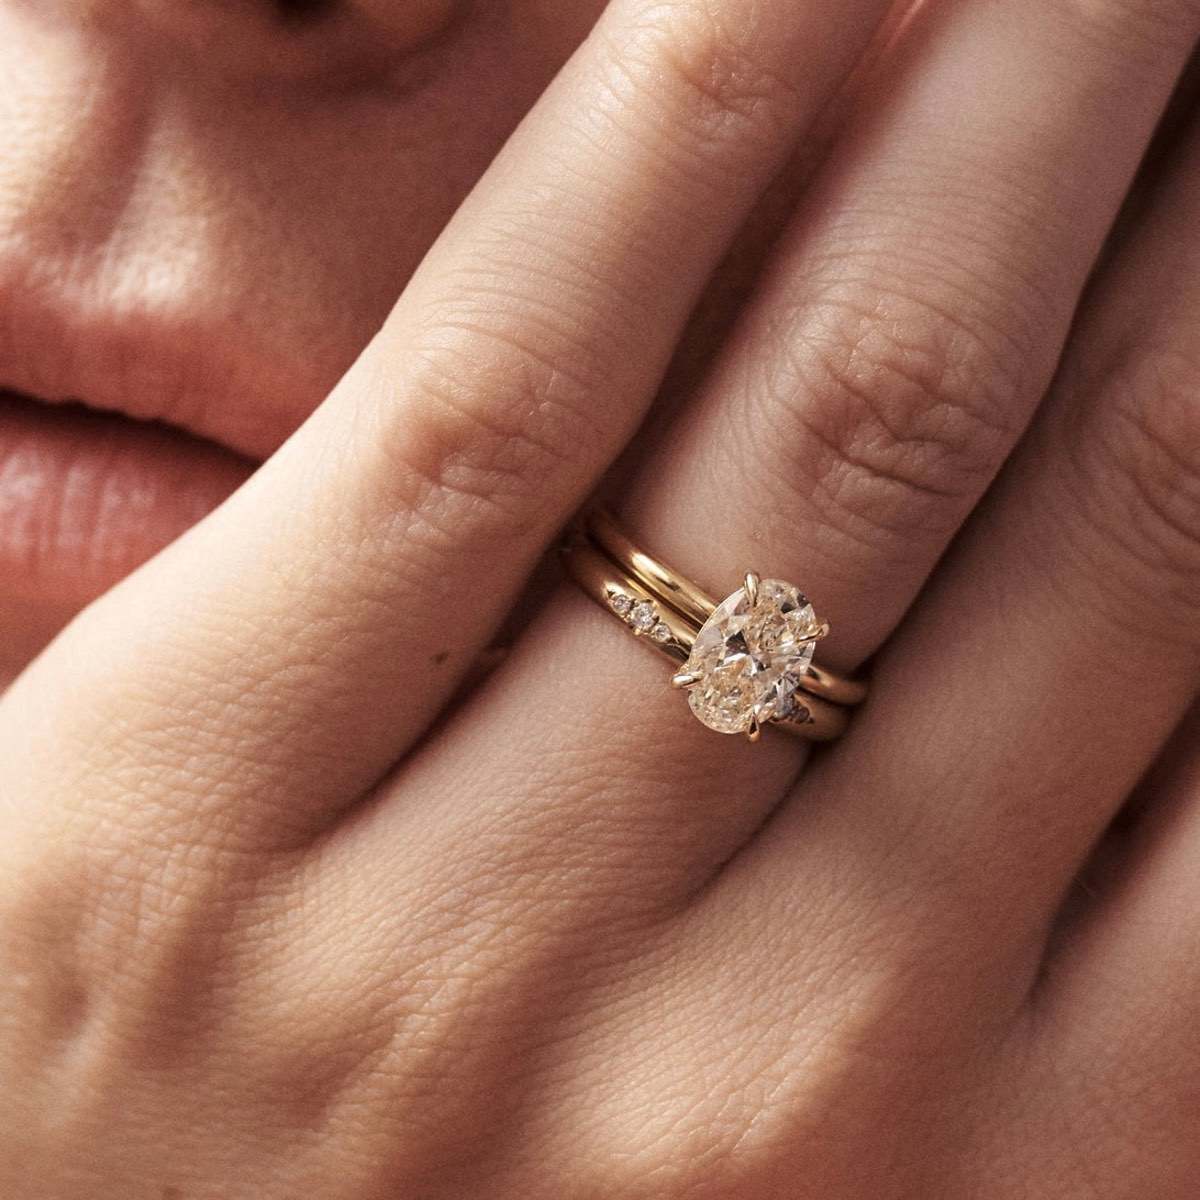 Petite Minimal Gemstone Ring with a Simple Band - Abhika Jewels